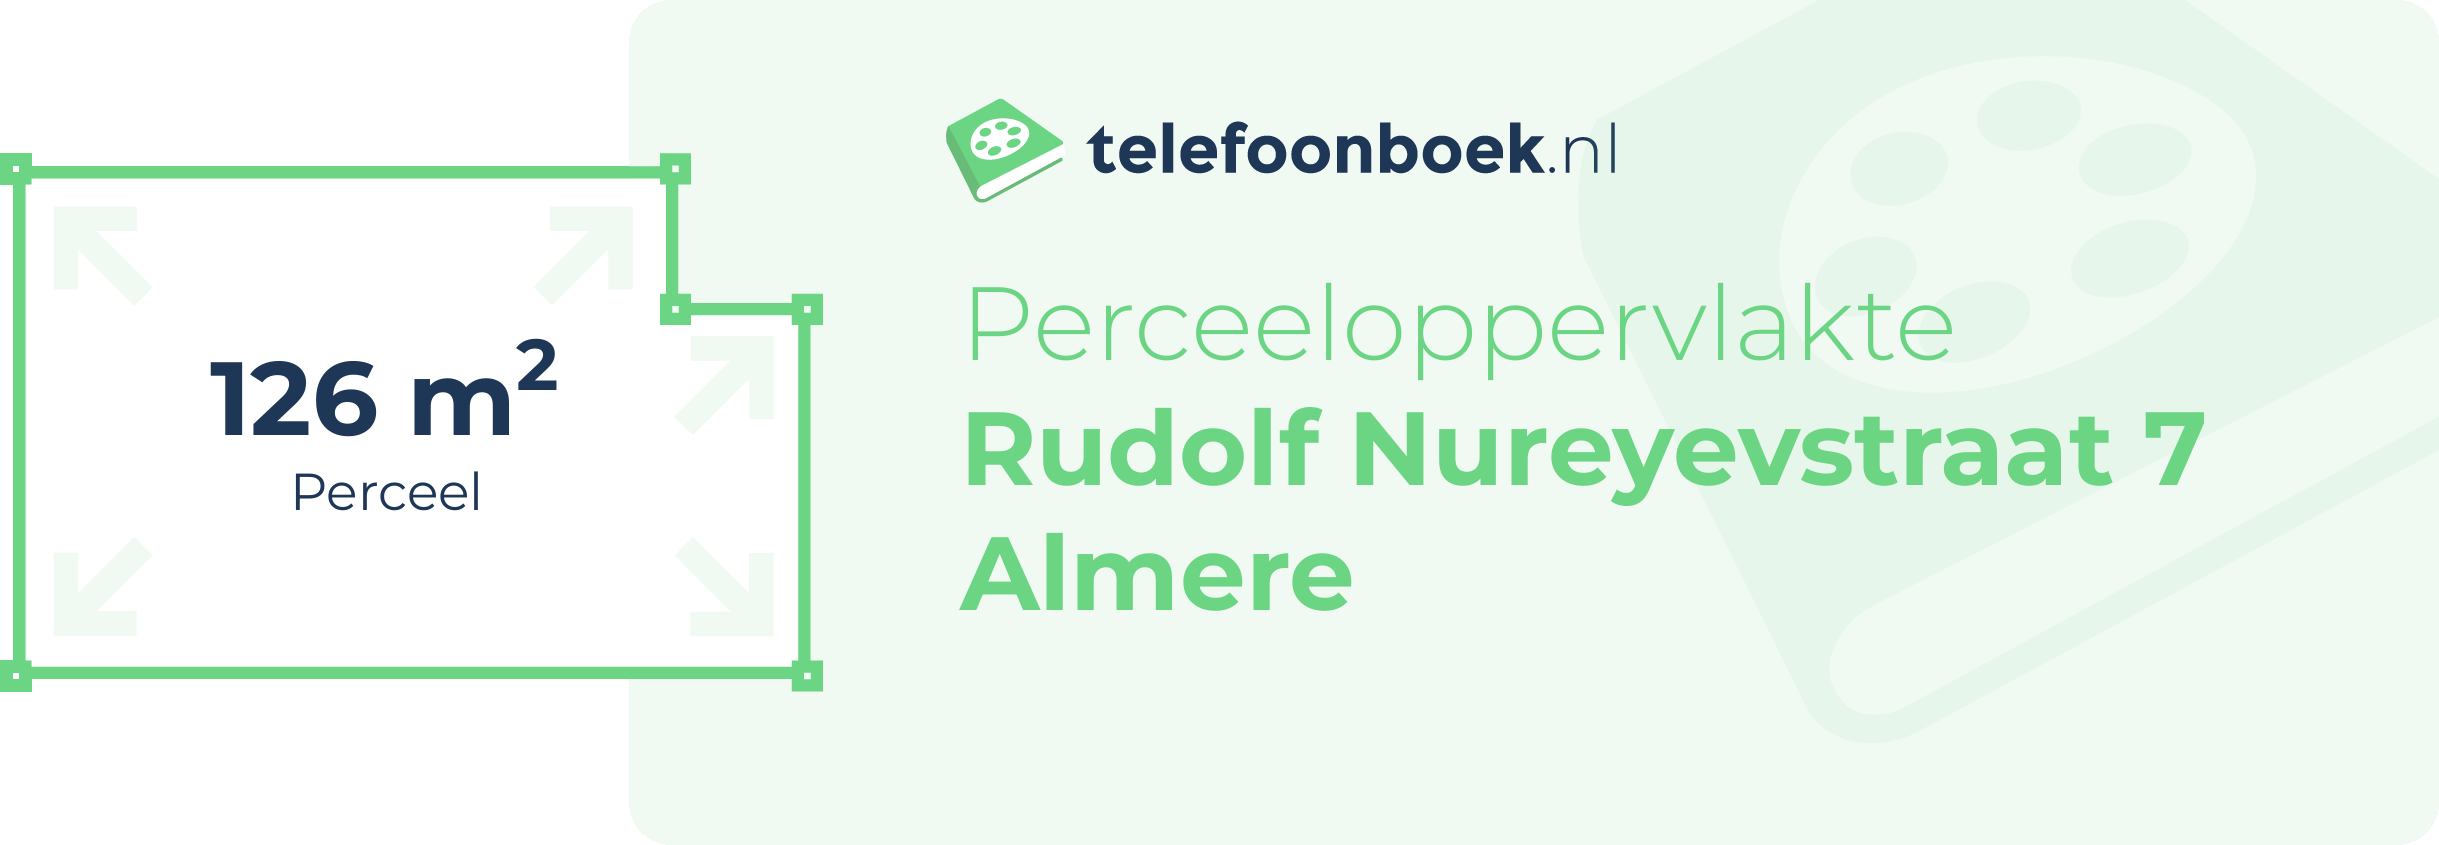 Perceeloppervlakte Rudolf Nureyevstraat 7 Almere